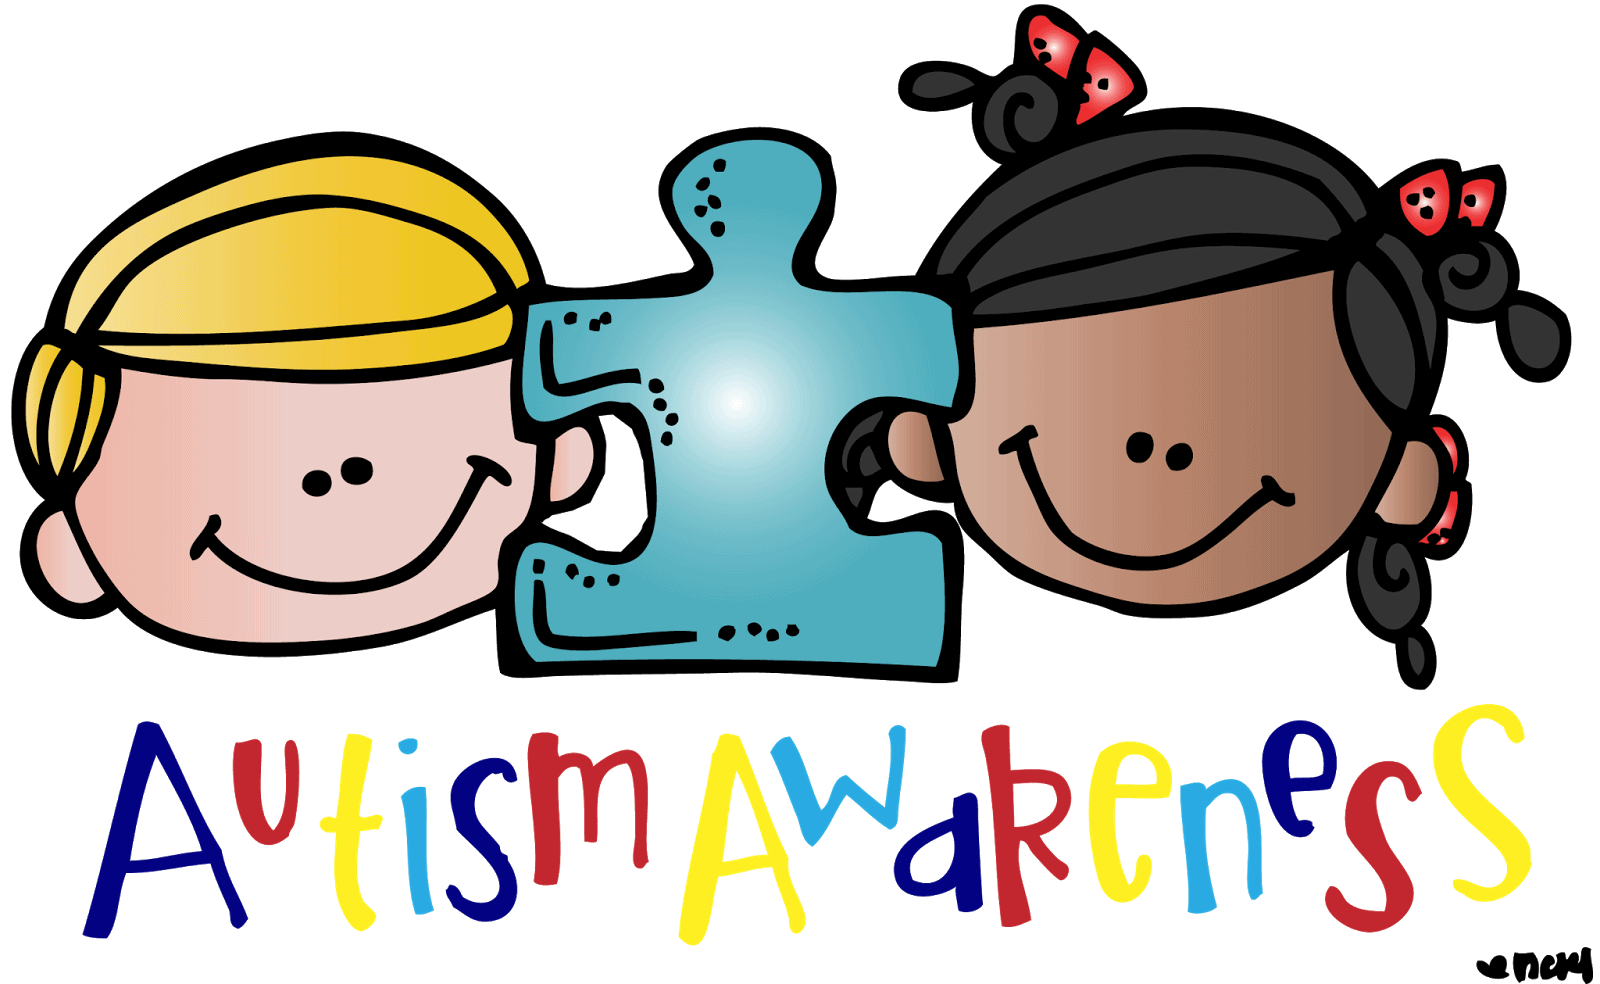 Autism Awareness Kids Face Picture